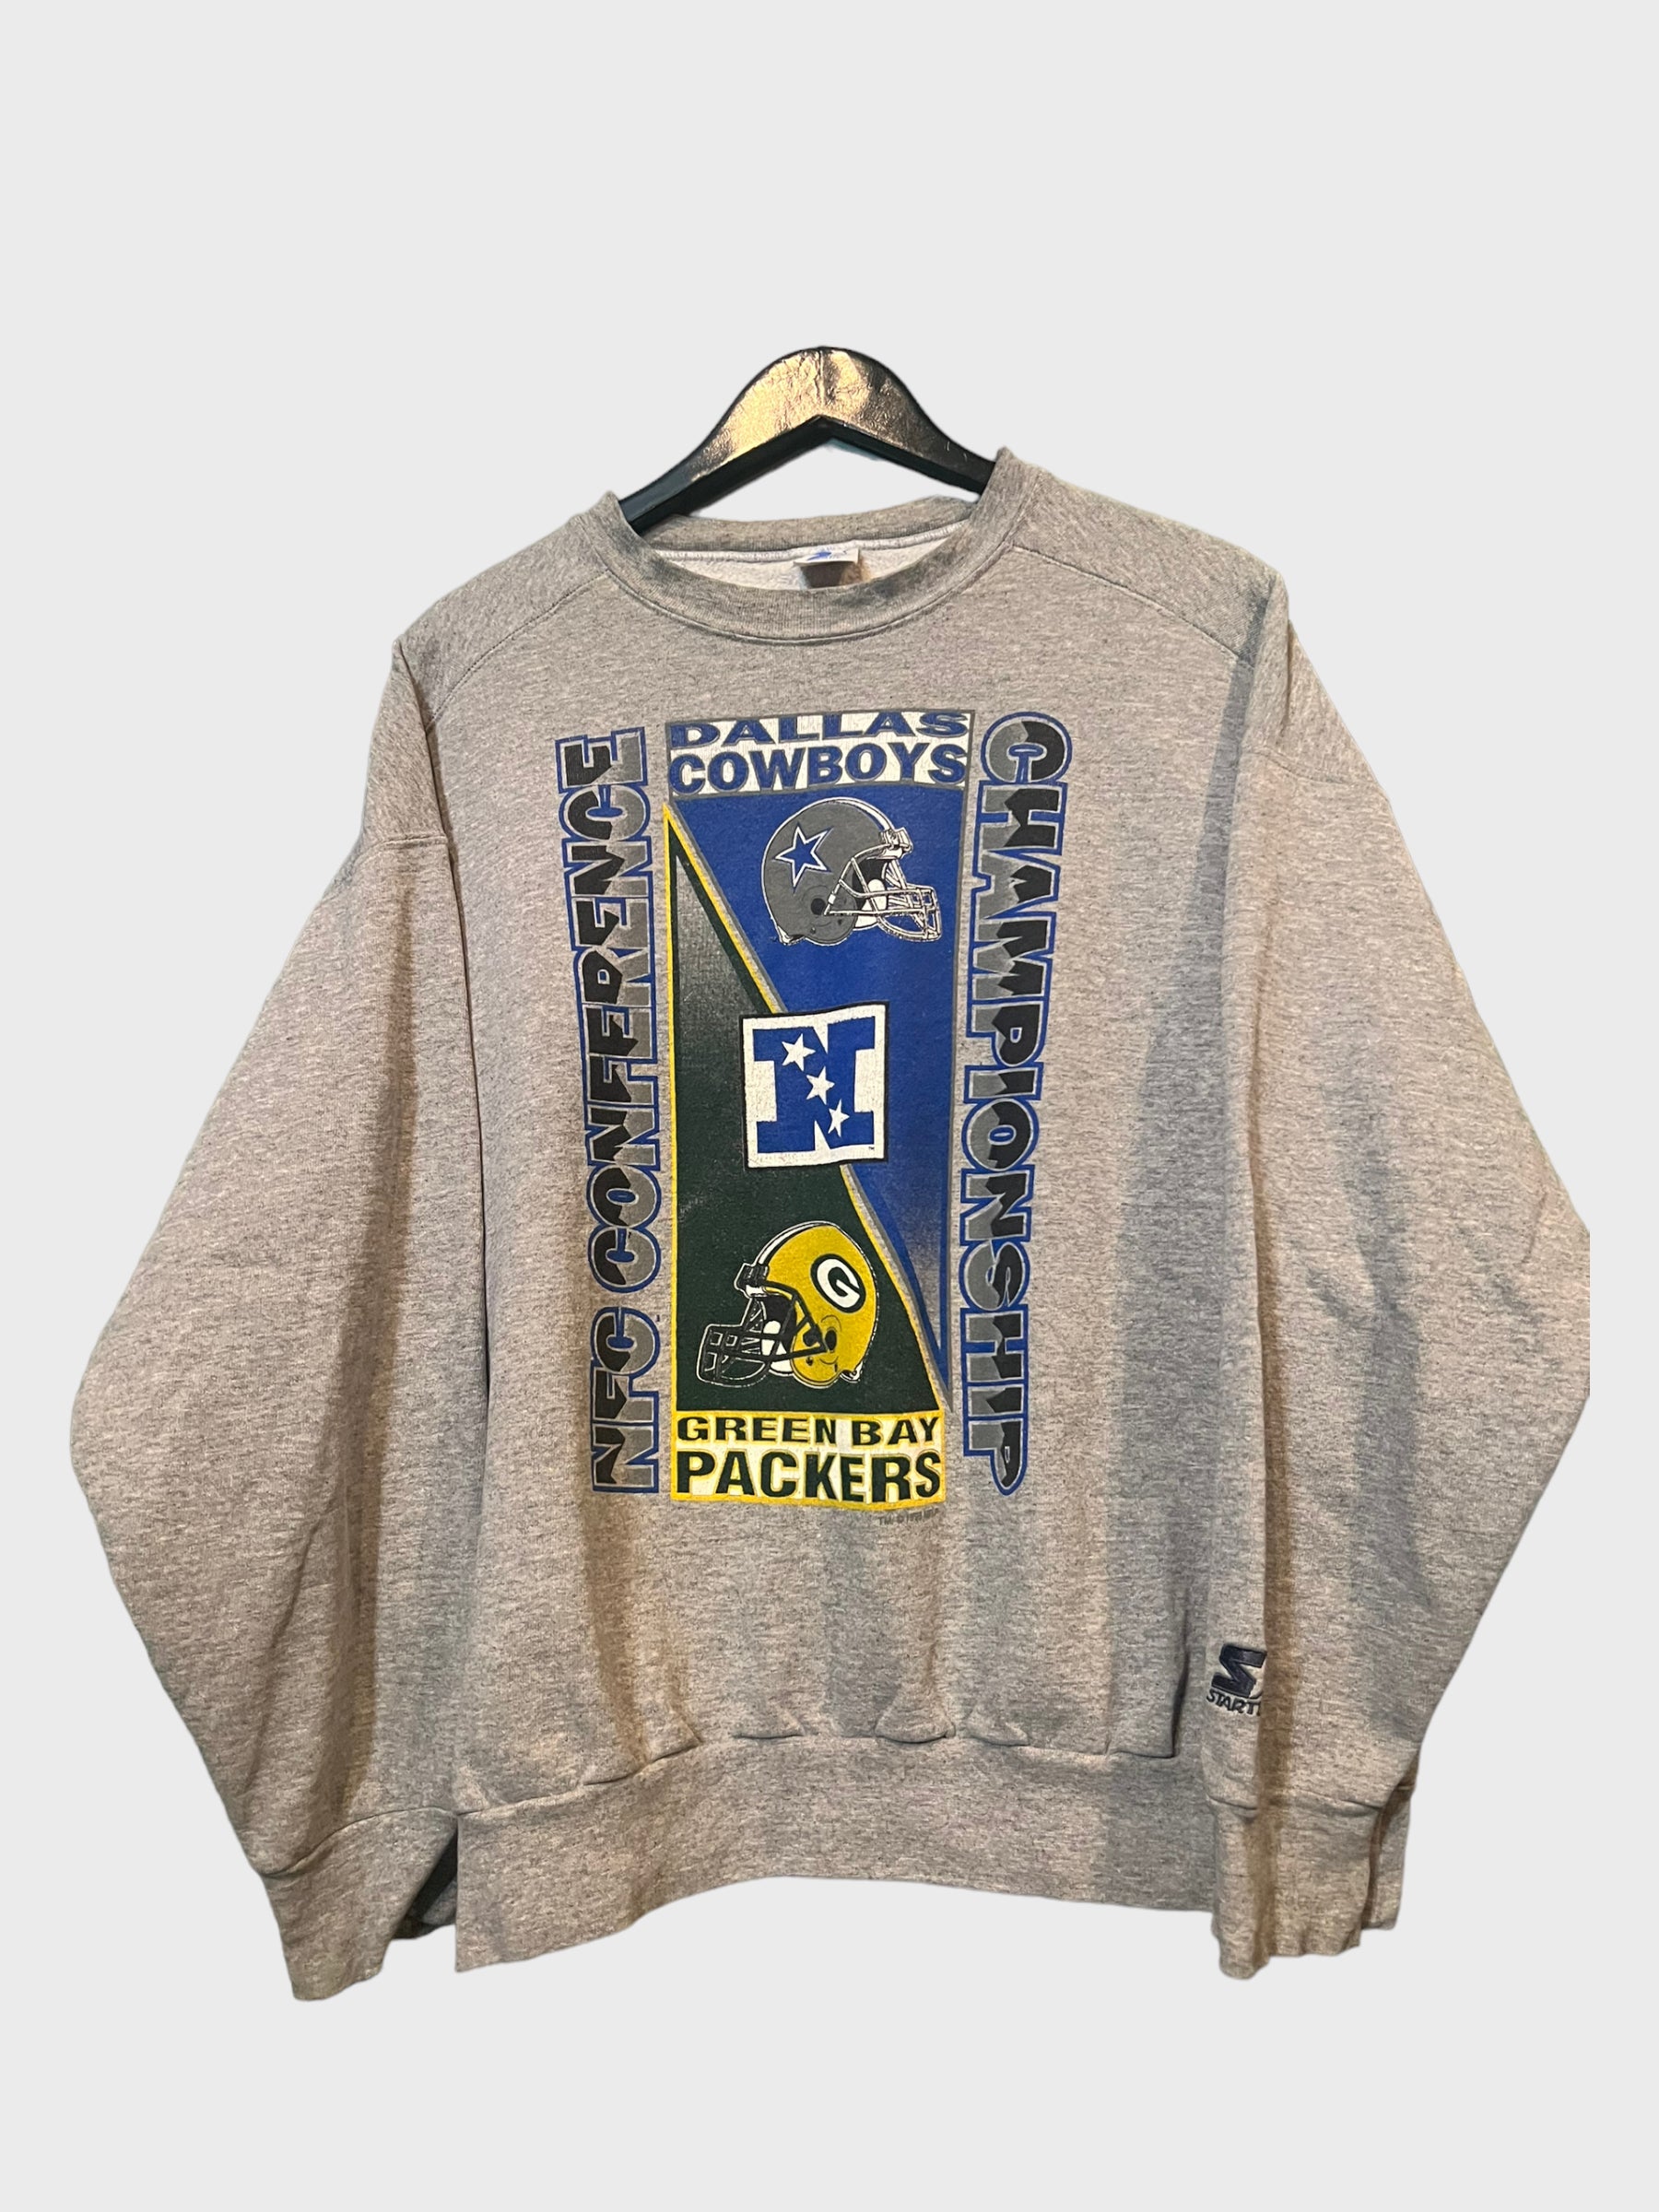 NFC Championship Sweater